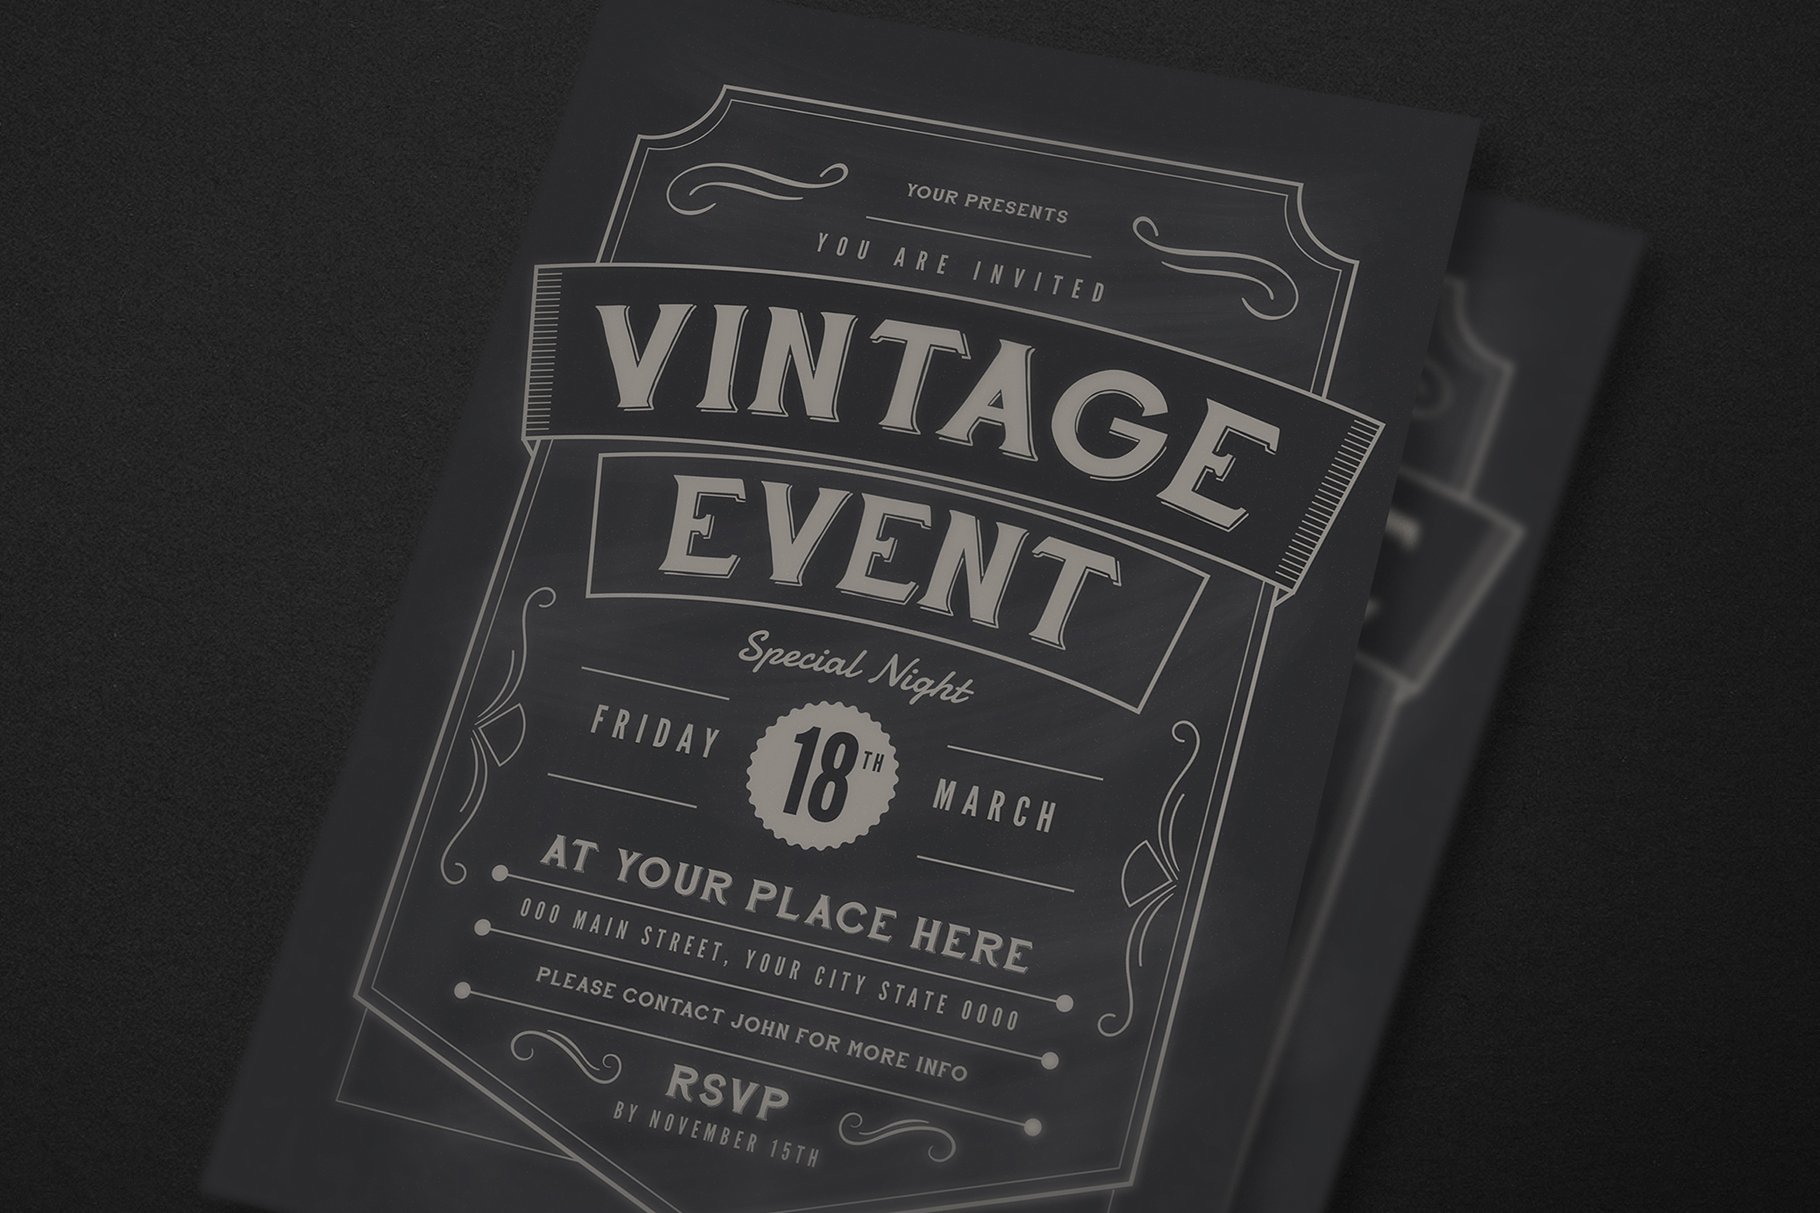 Vintage Event Flyer preview image.